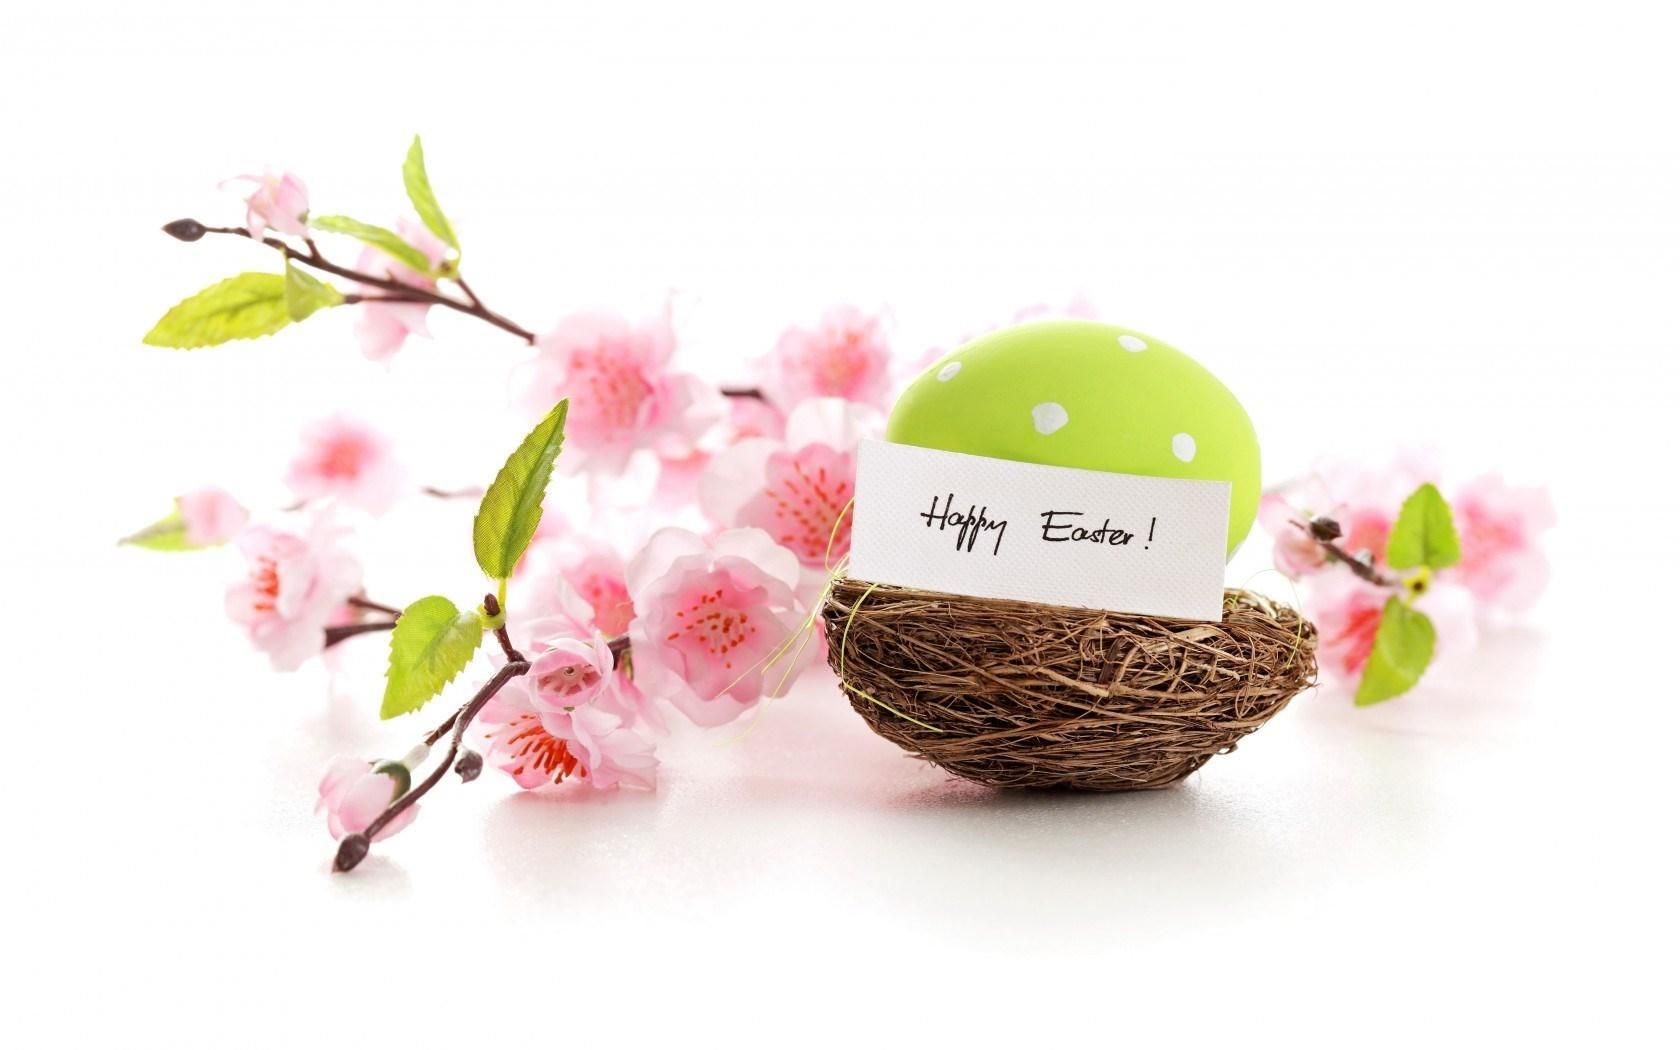 Happy Easter Spring Flowers Eggs HD desktop wallpaper, Widescreen, High Definition